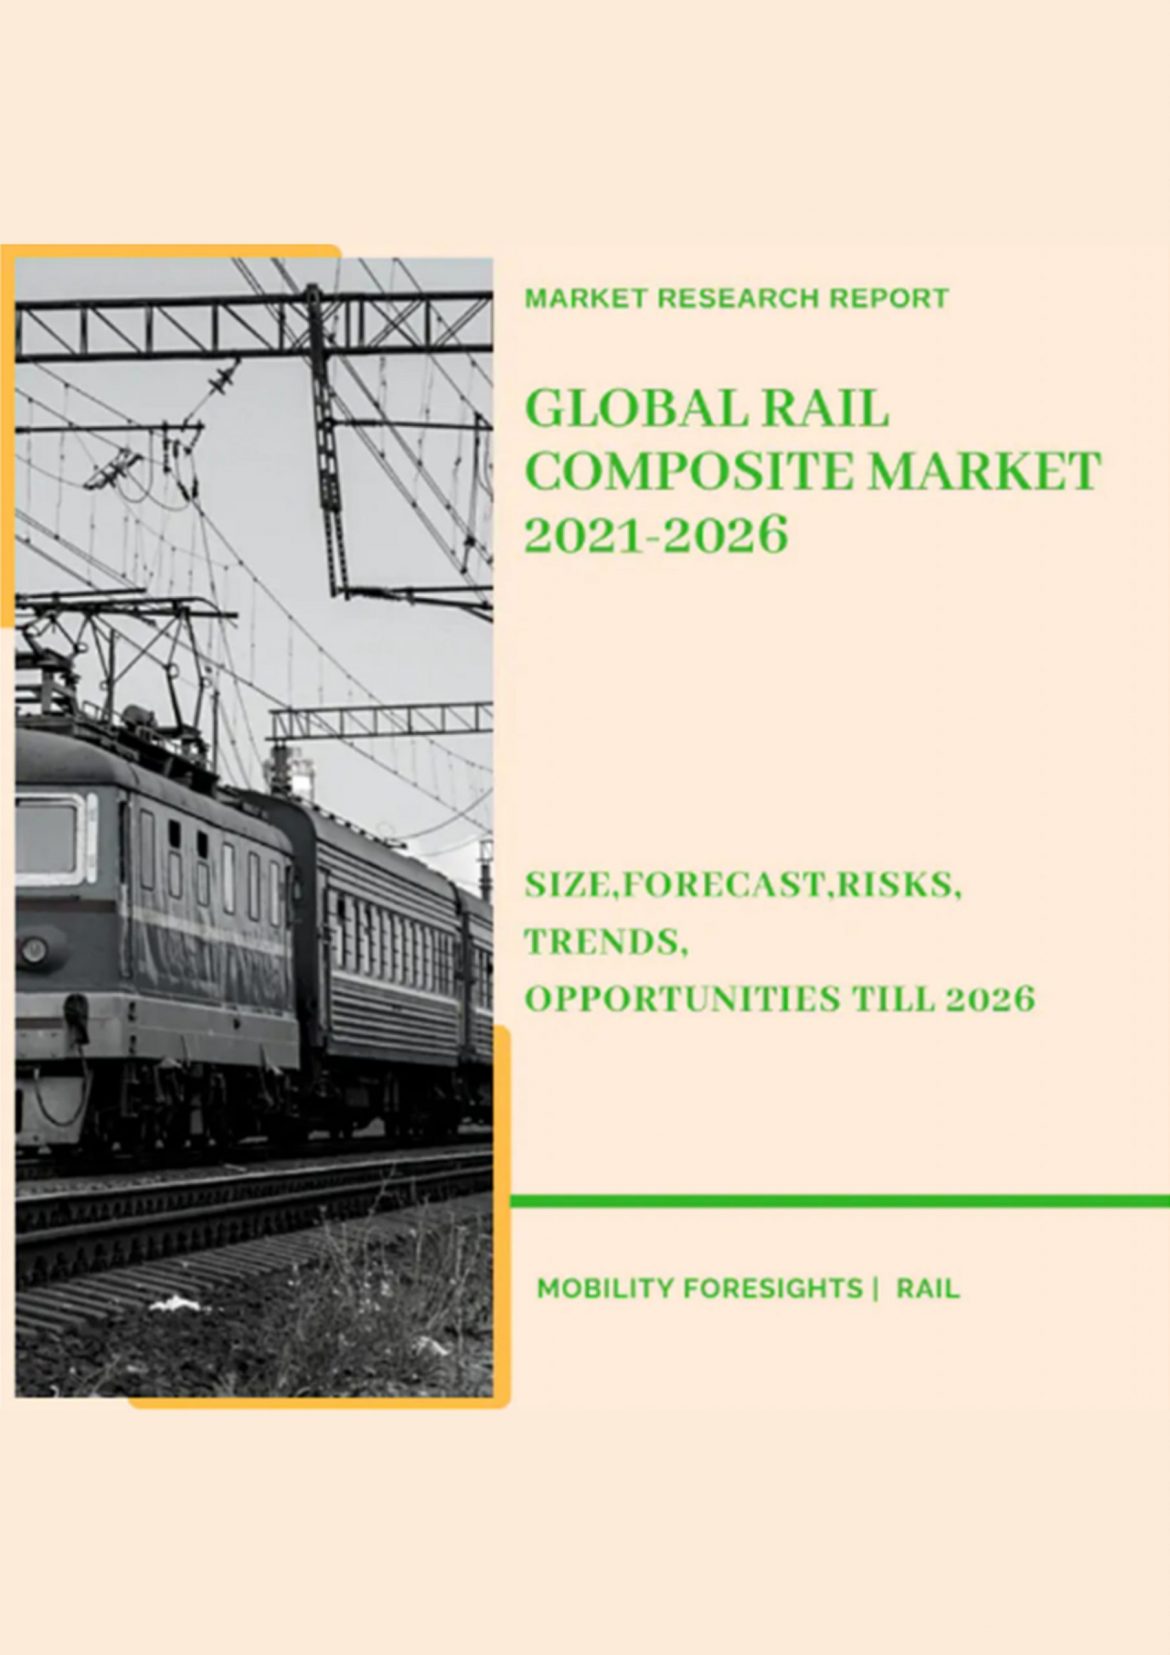 Global Rail Composite Market 2021-2026